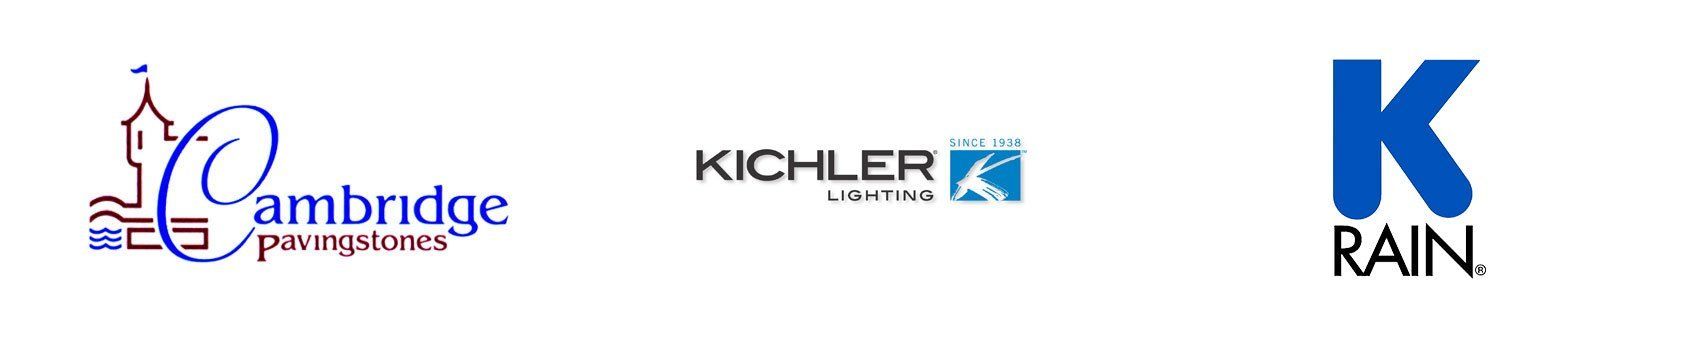 Cambridge Pavers, Kichler Lighting, K Rain Sprinklers